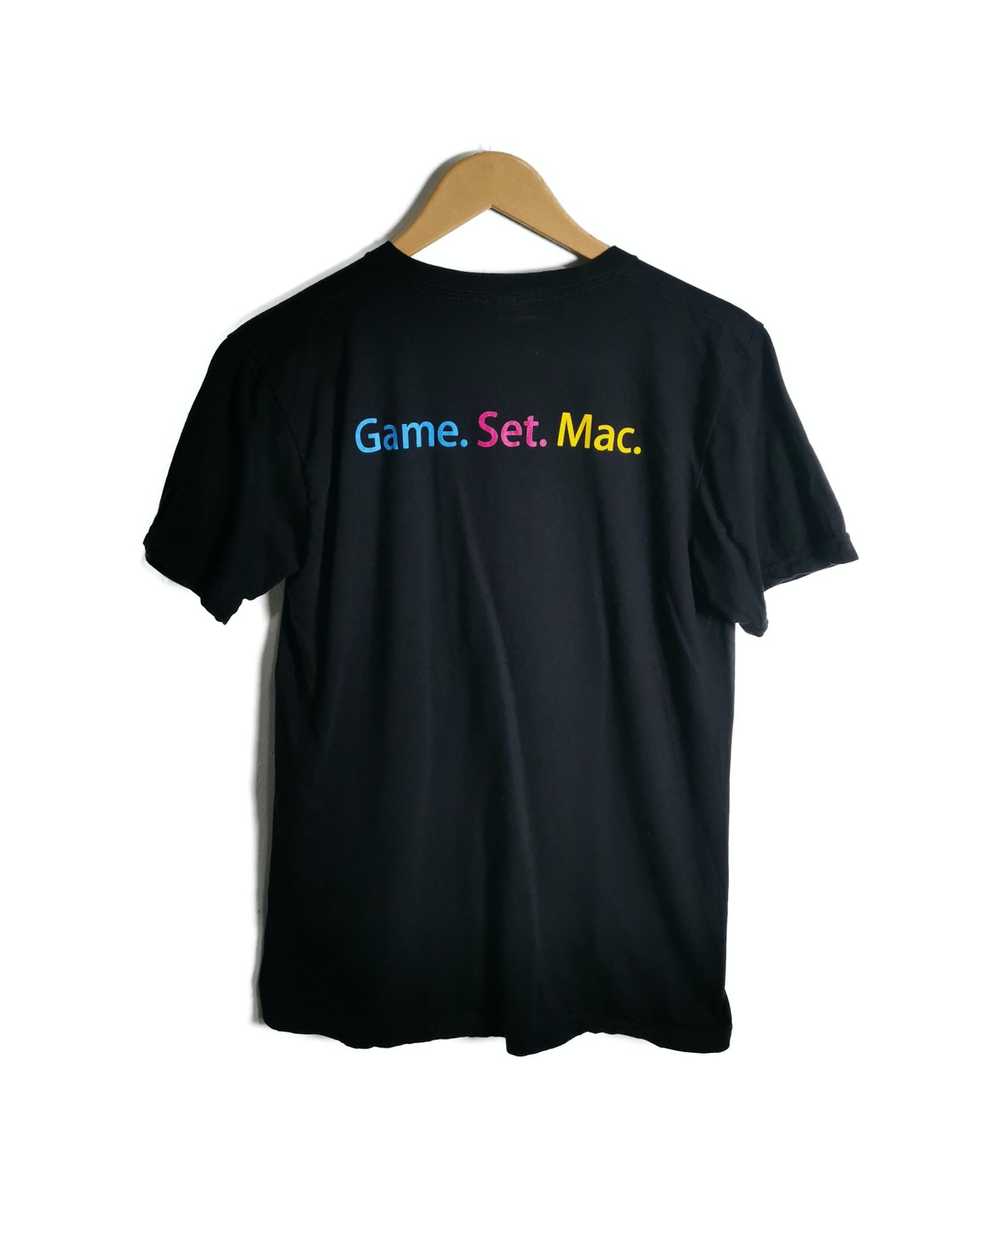 Apple Apple Inc iphone iMac Apple Tennis T shirt - image 2